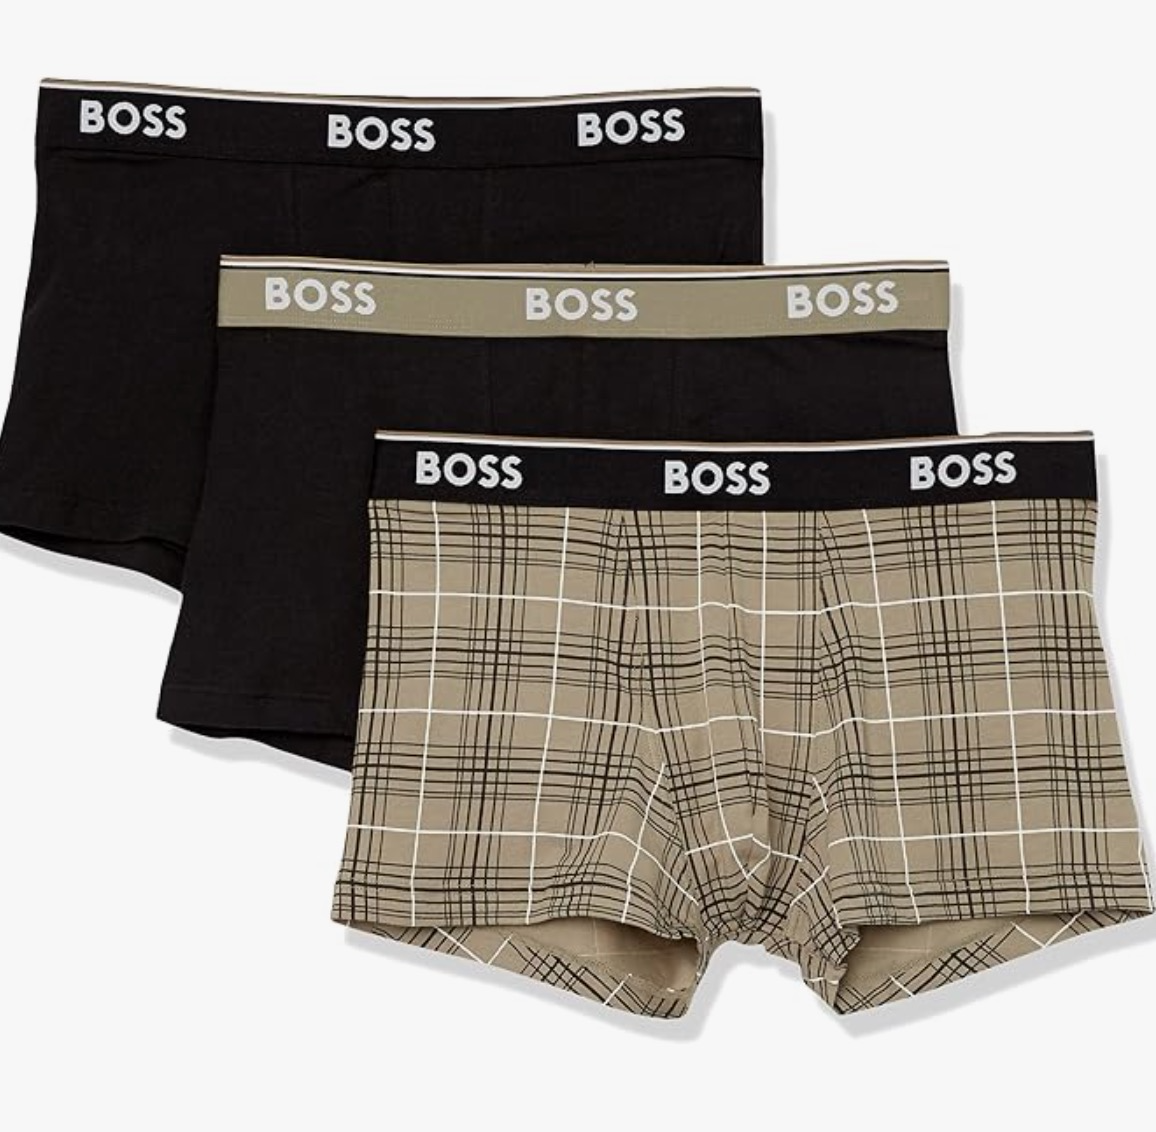 BOSS Hugo Boss 雨果·博斯 男士弹力棉平角内裤 3条装 S码172元